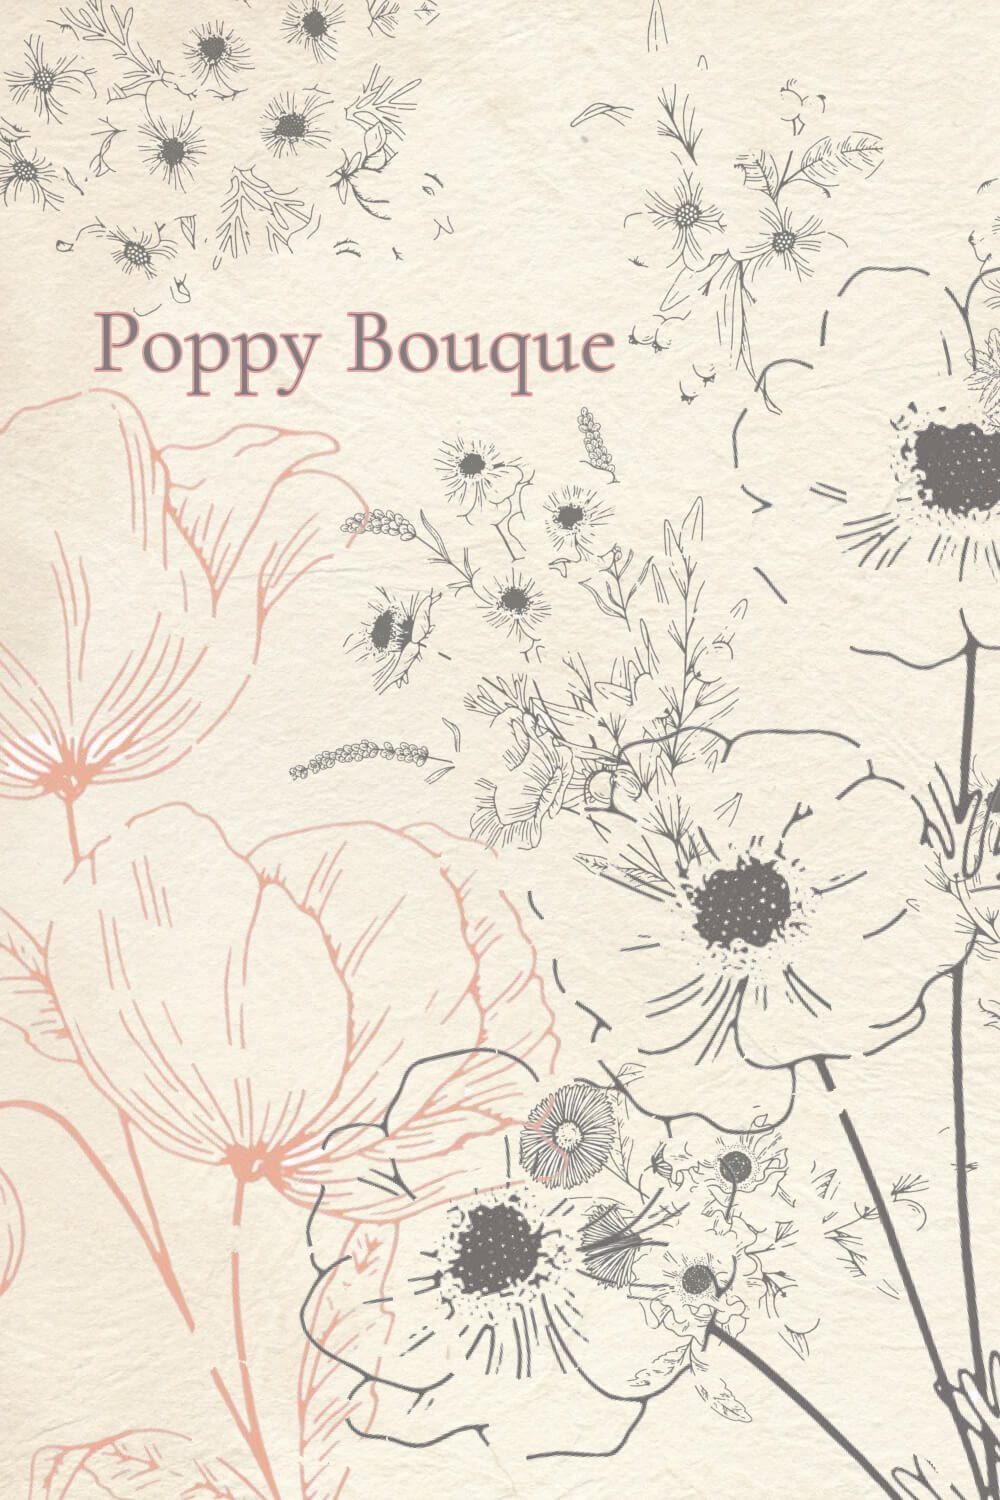 Poppy Bouque by Bea & Bloom.